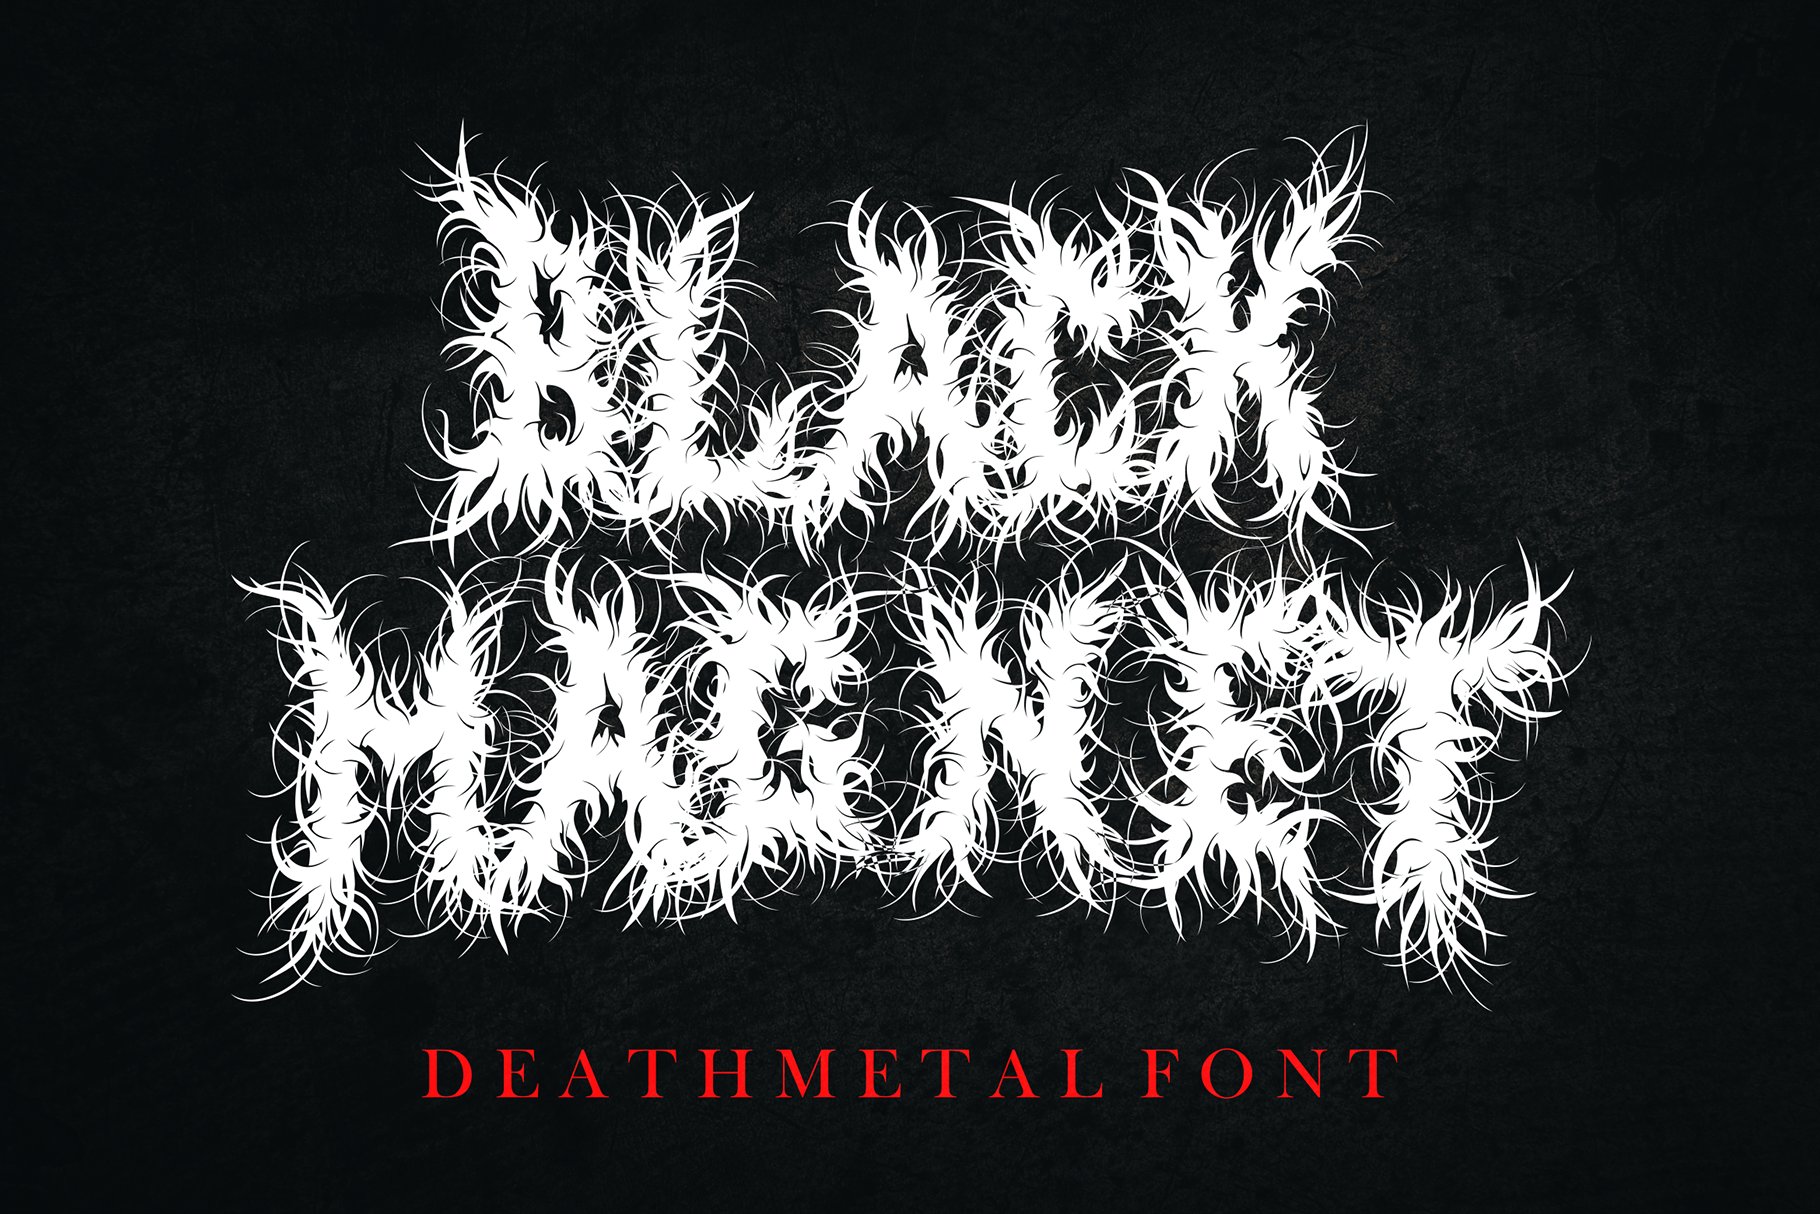 Black Magnet cover image.